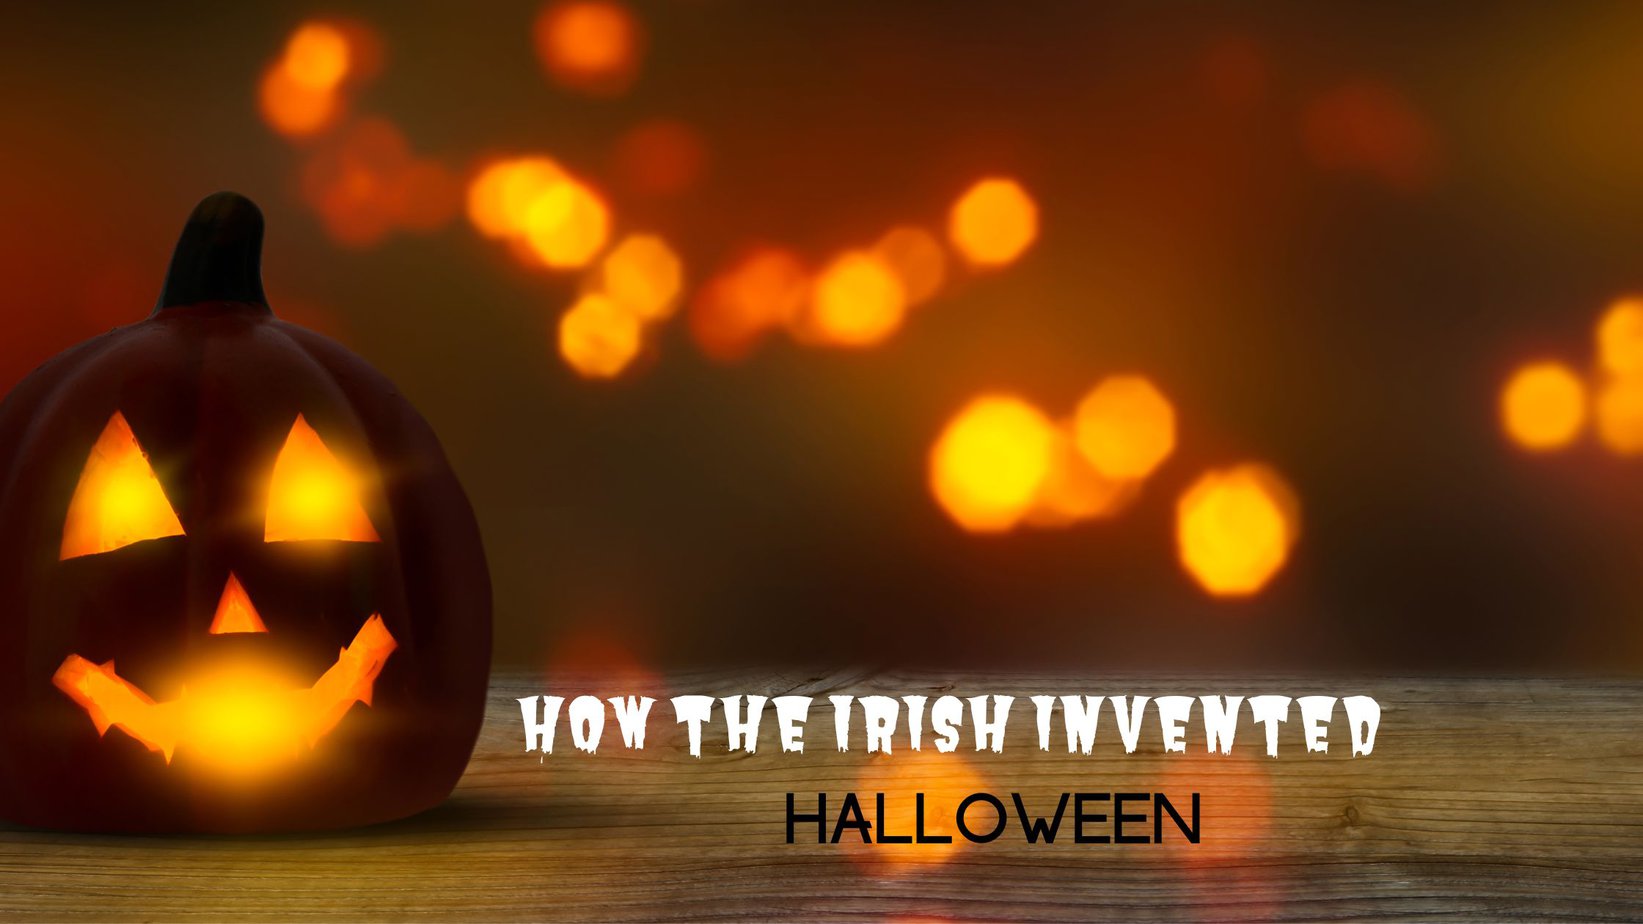 How the Irish invented Halloween